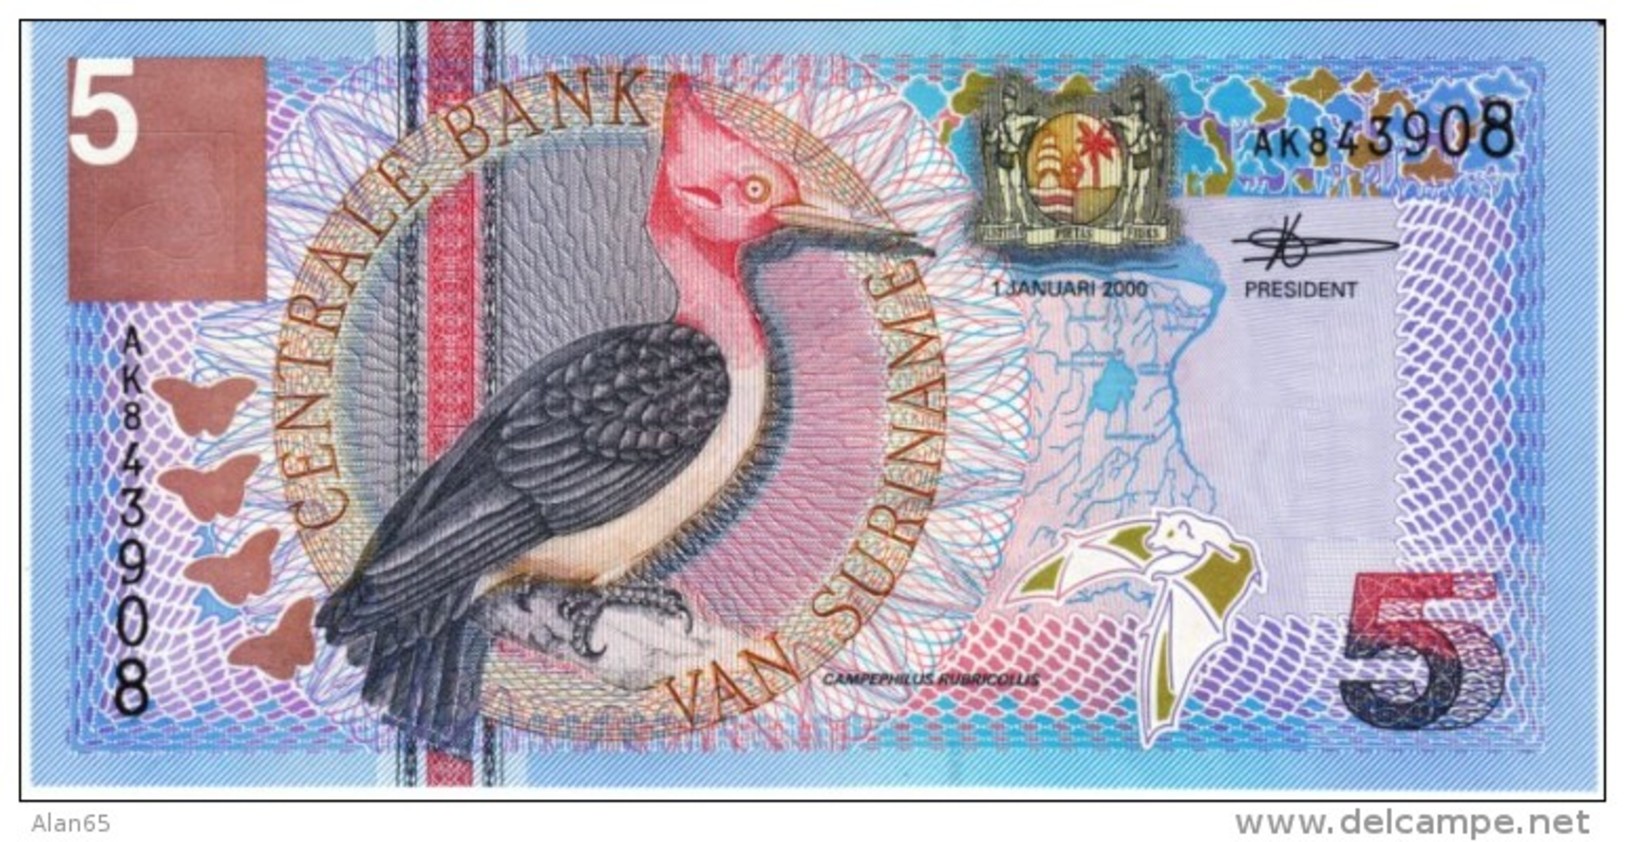 Suriname #146 5 Gulden 2000 Banknote Money Currency, Bird Flowers - Suriname